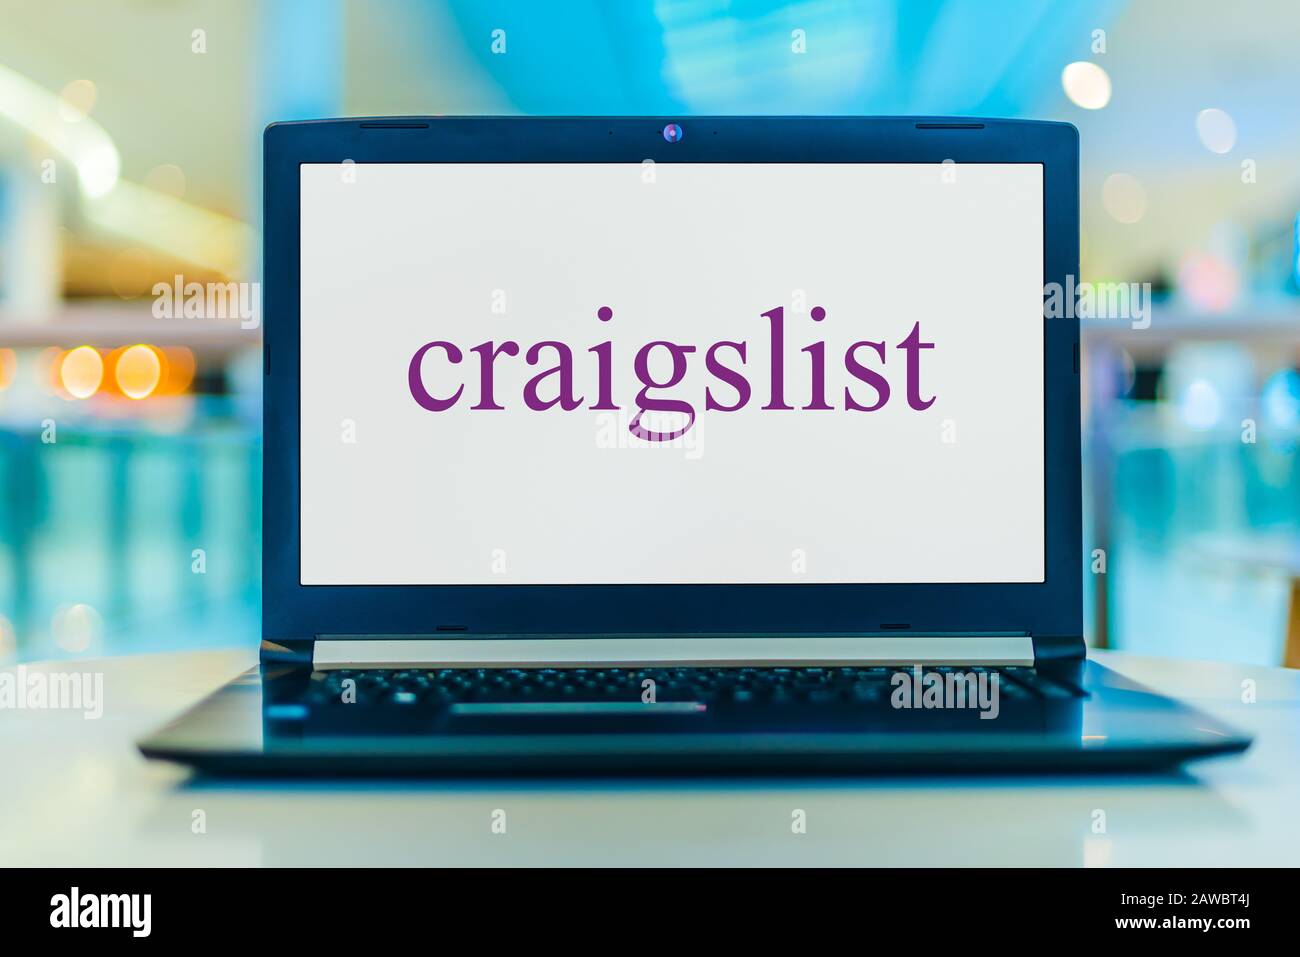 POZNAN, POL - JAN 30, 2020: Laptop computer displaying logo of Craigslist, an American classified advertisements website. Stock Photo